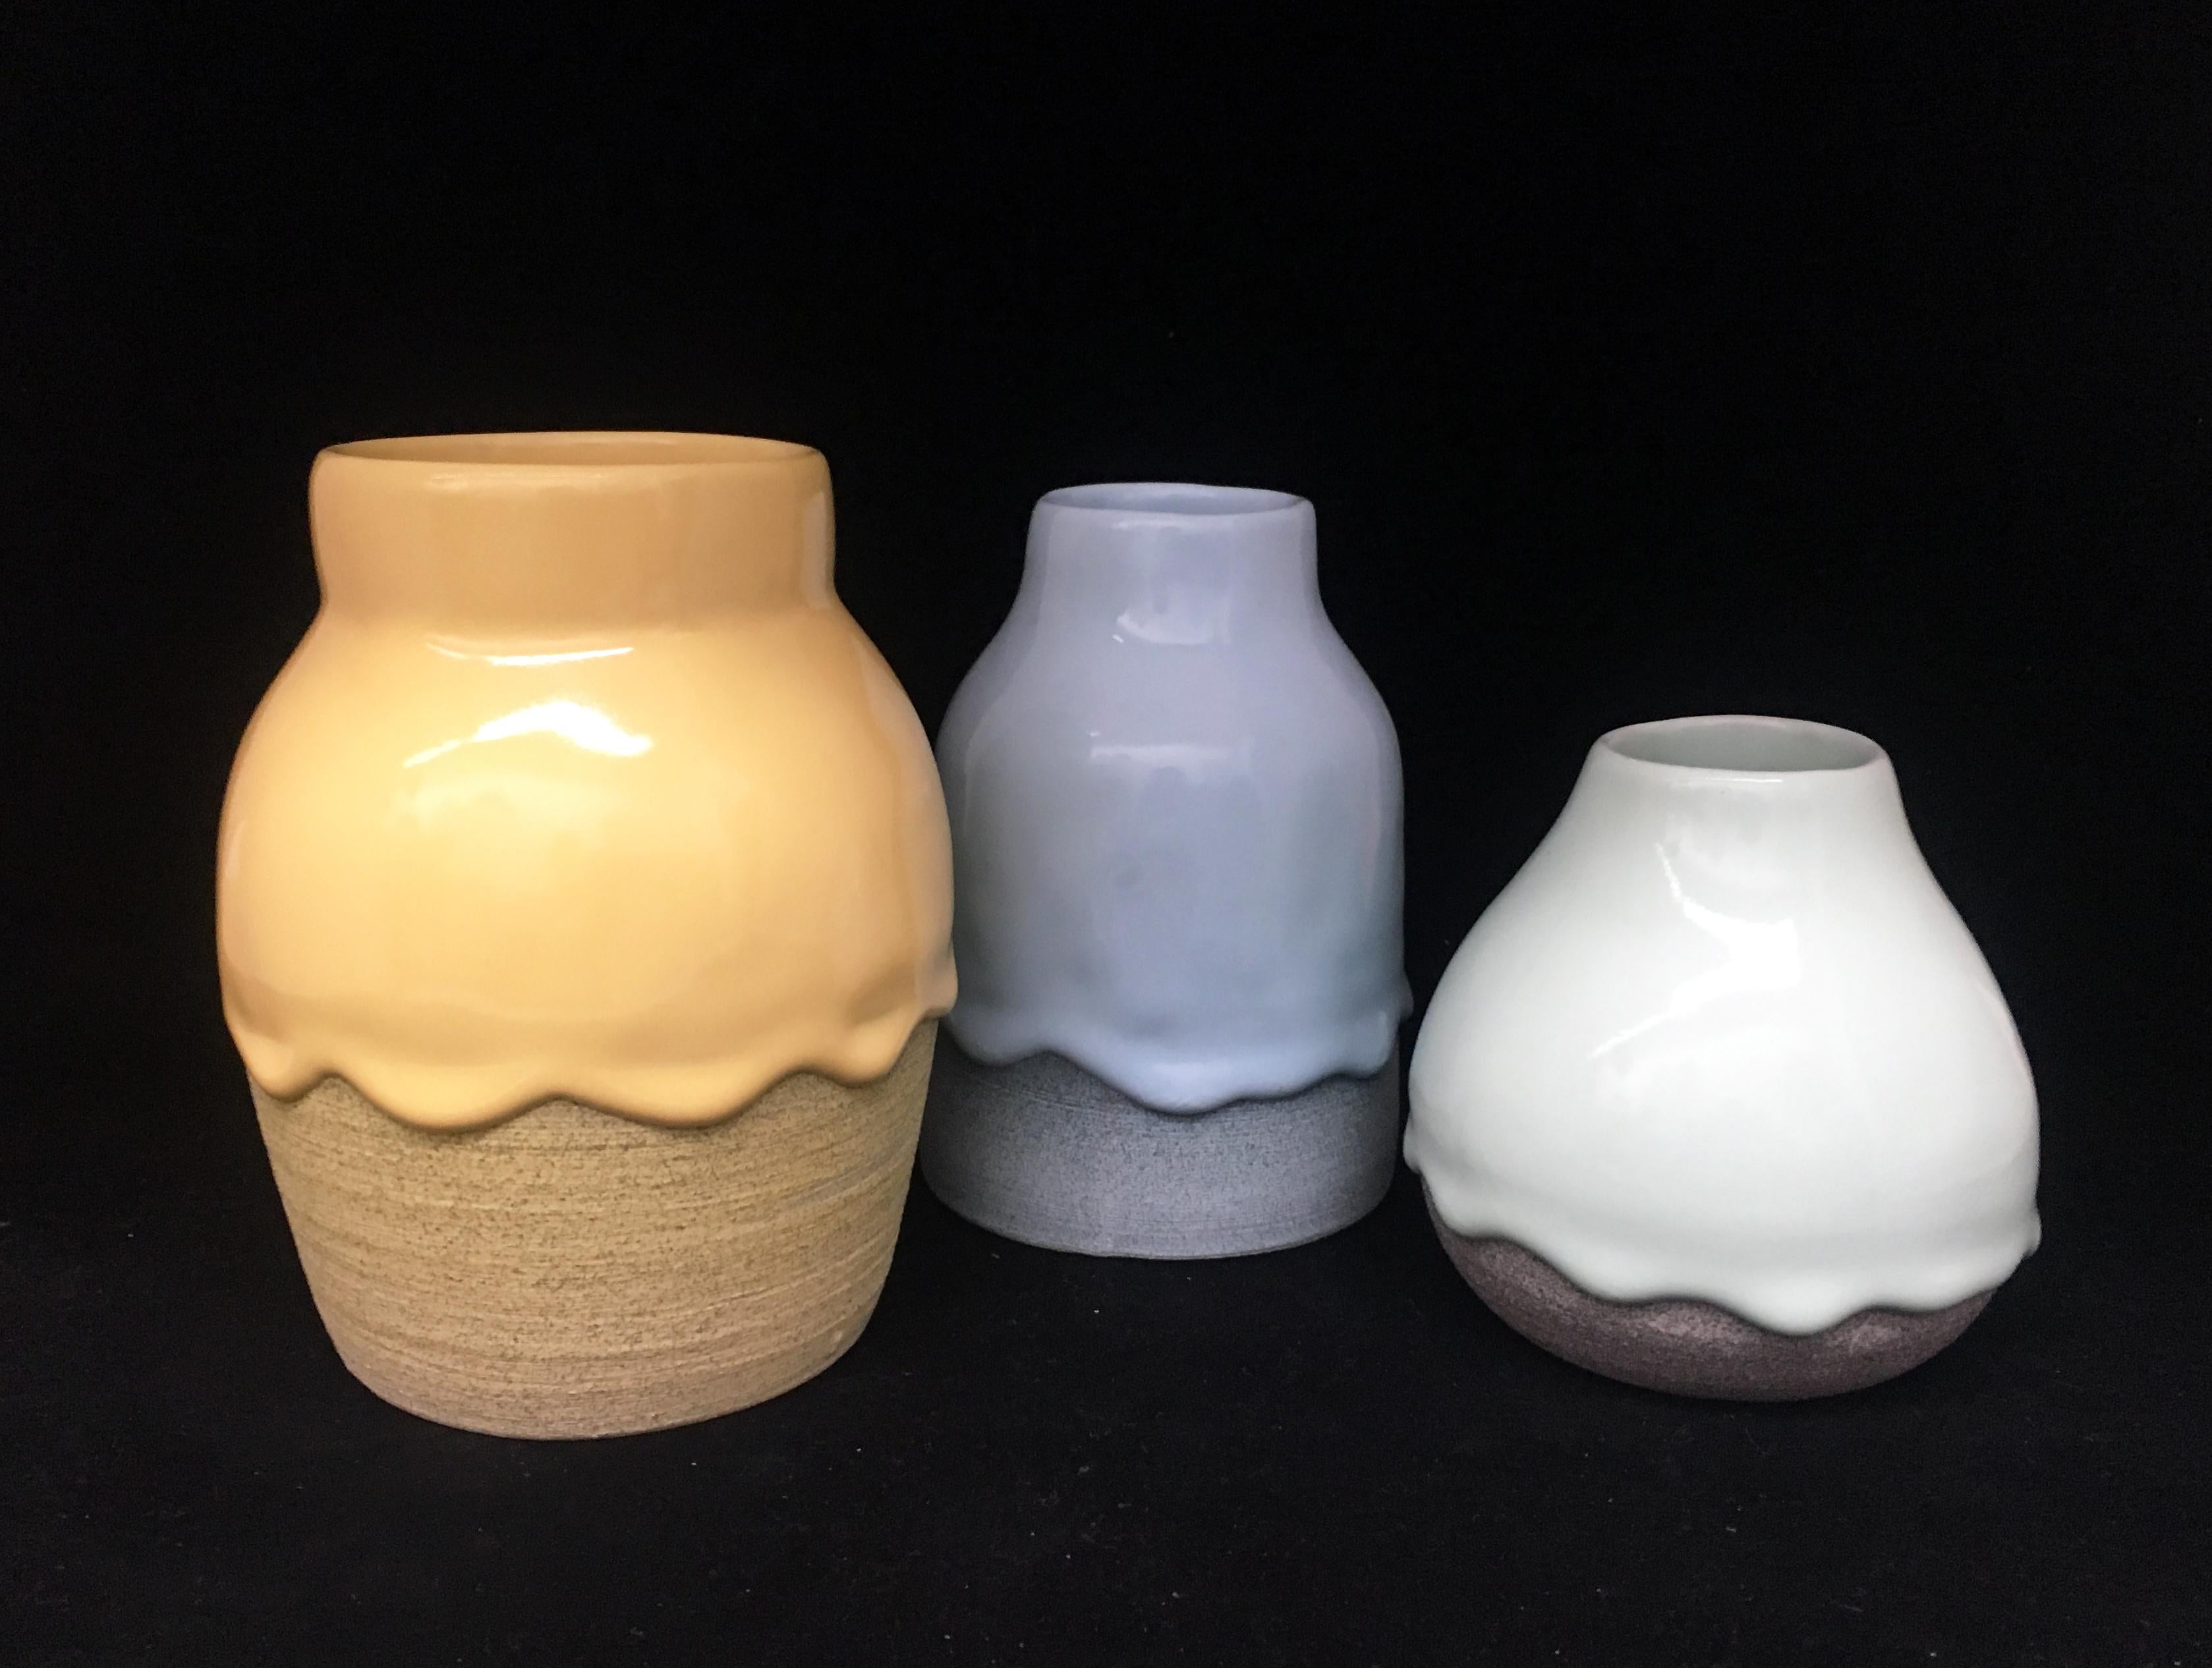 Brian Giniewski Abstract Sculpture - Set of Three Ceramic Vessels, Contemporary Design, Colorful Glazed Stoneware